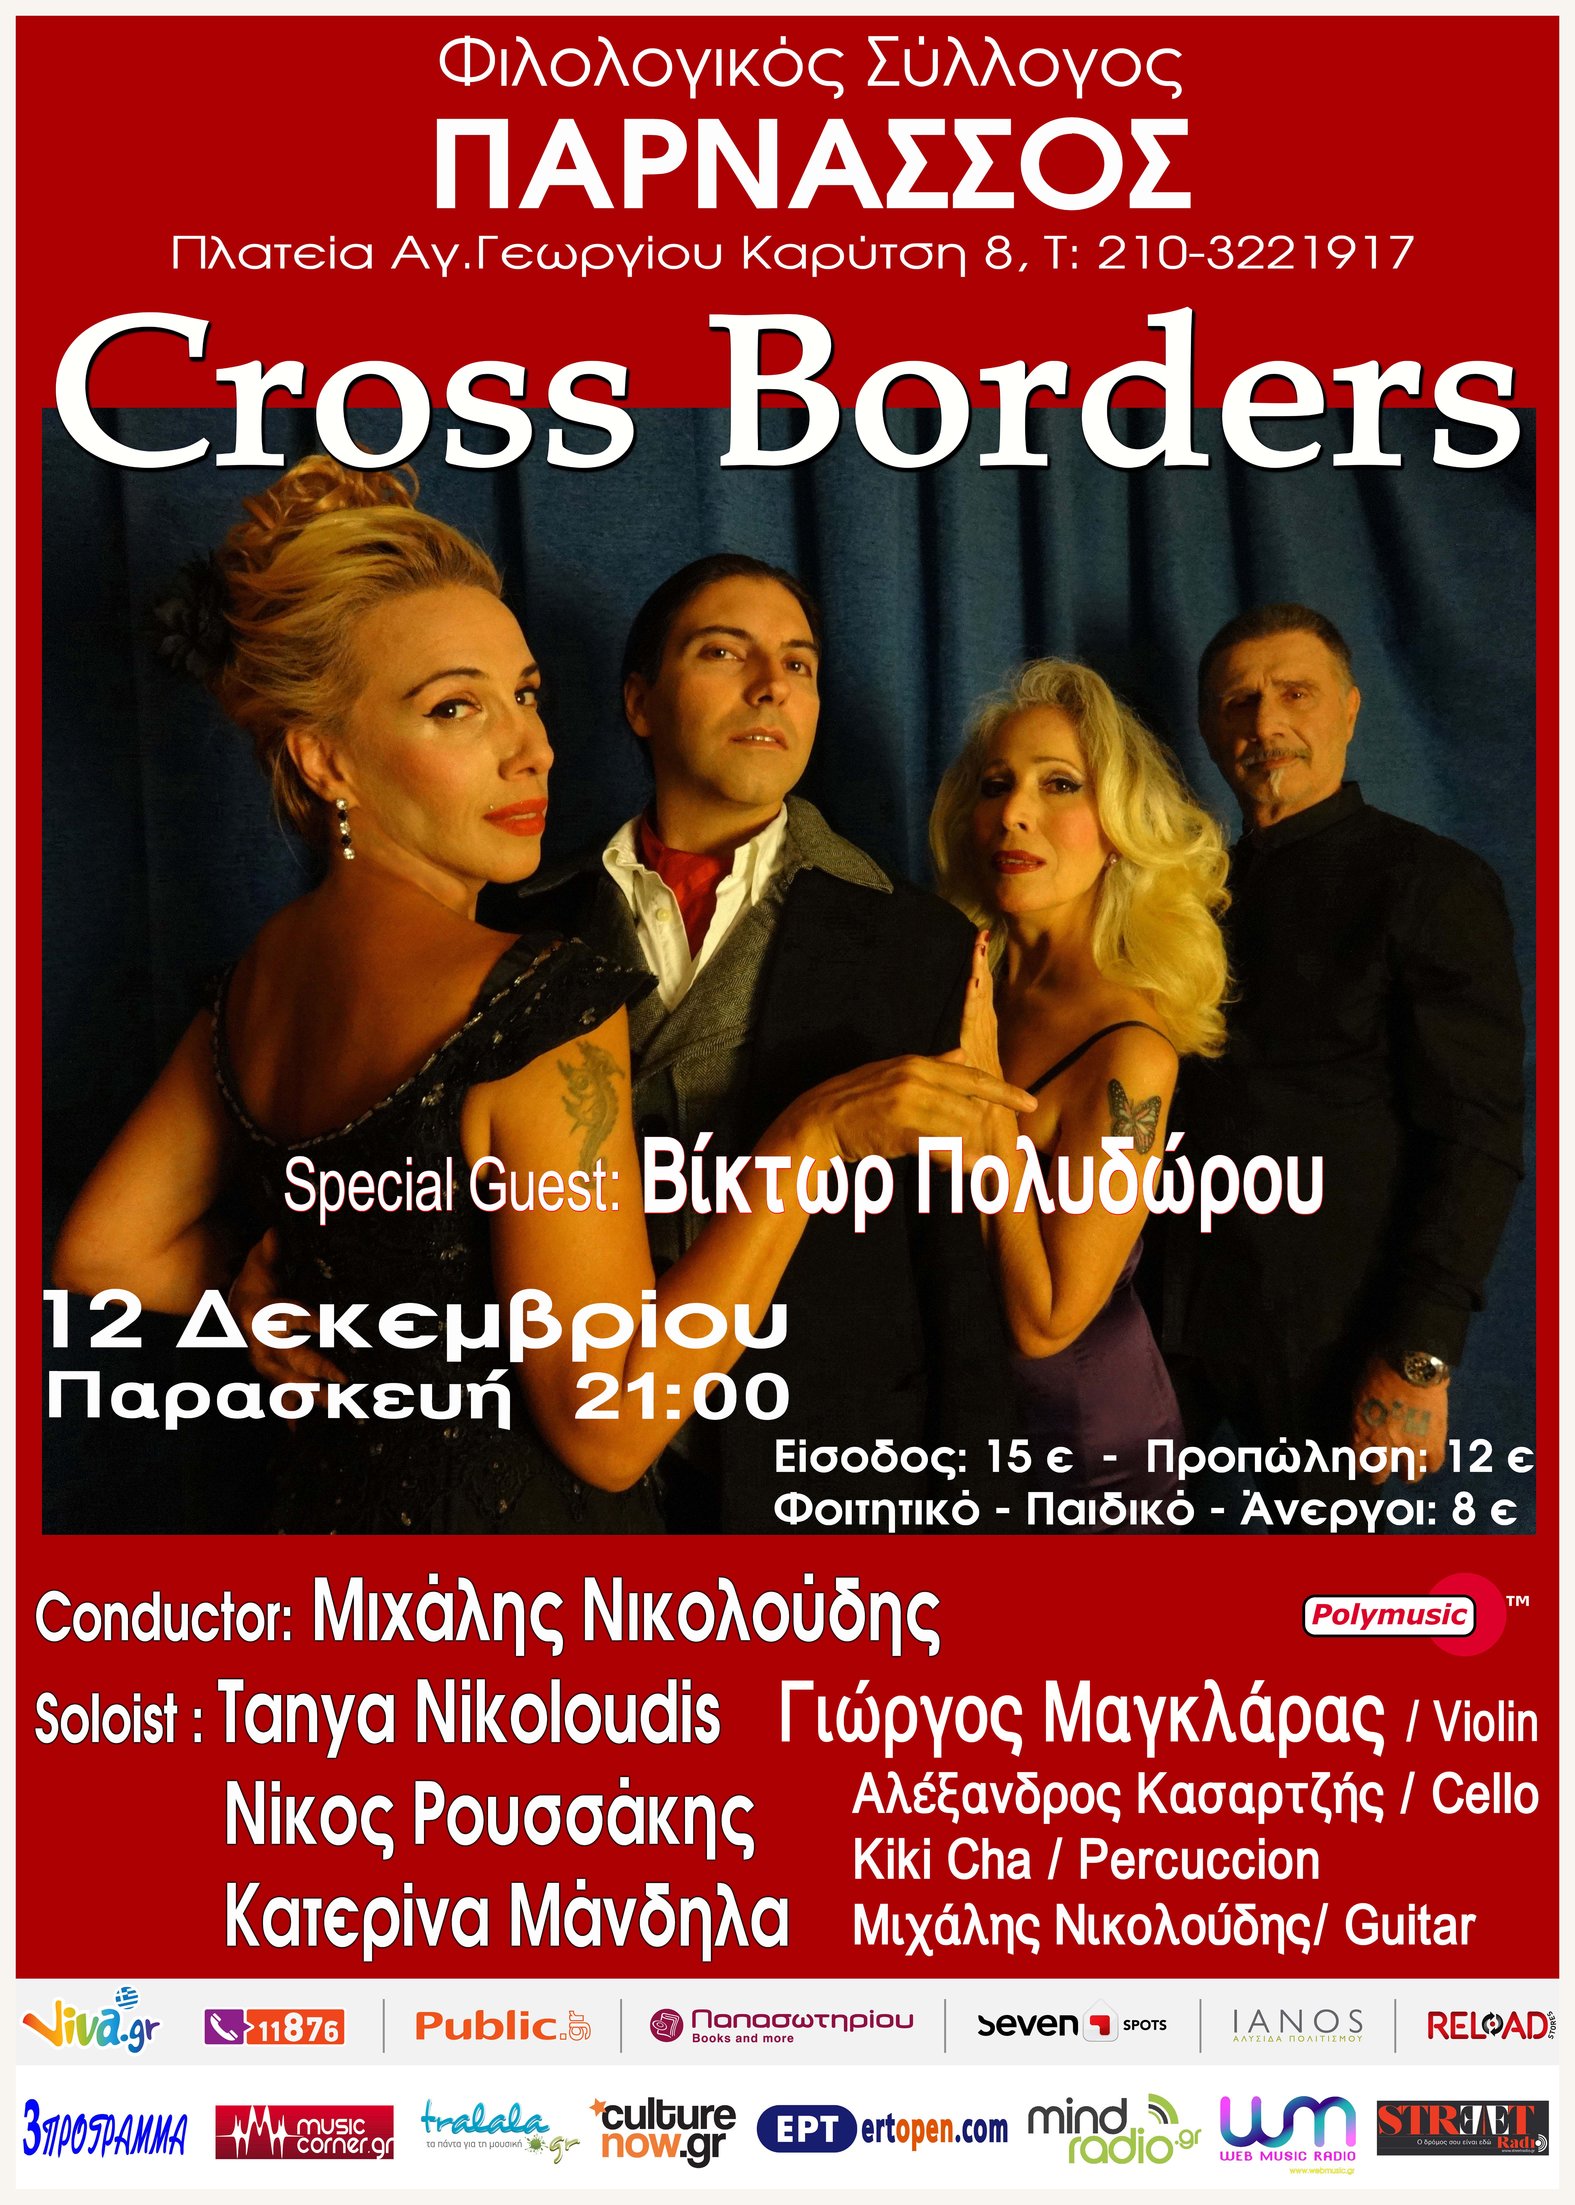 rsz cross borders parnassos portrait jpg copy